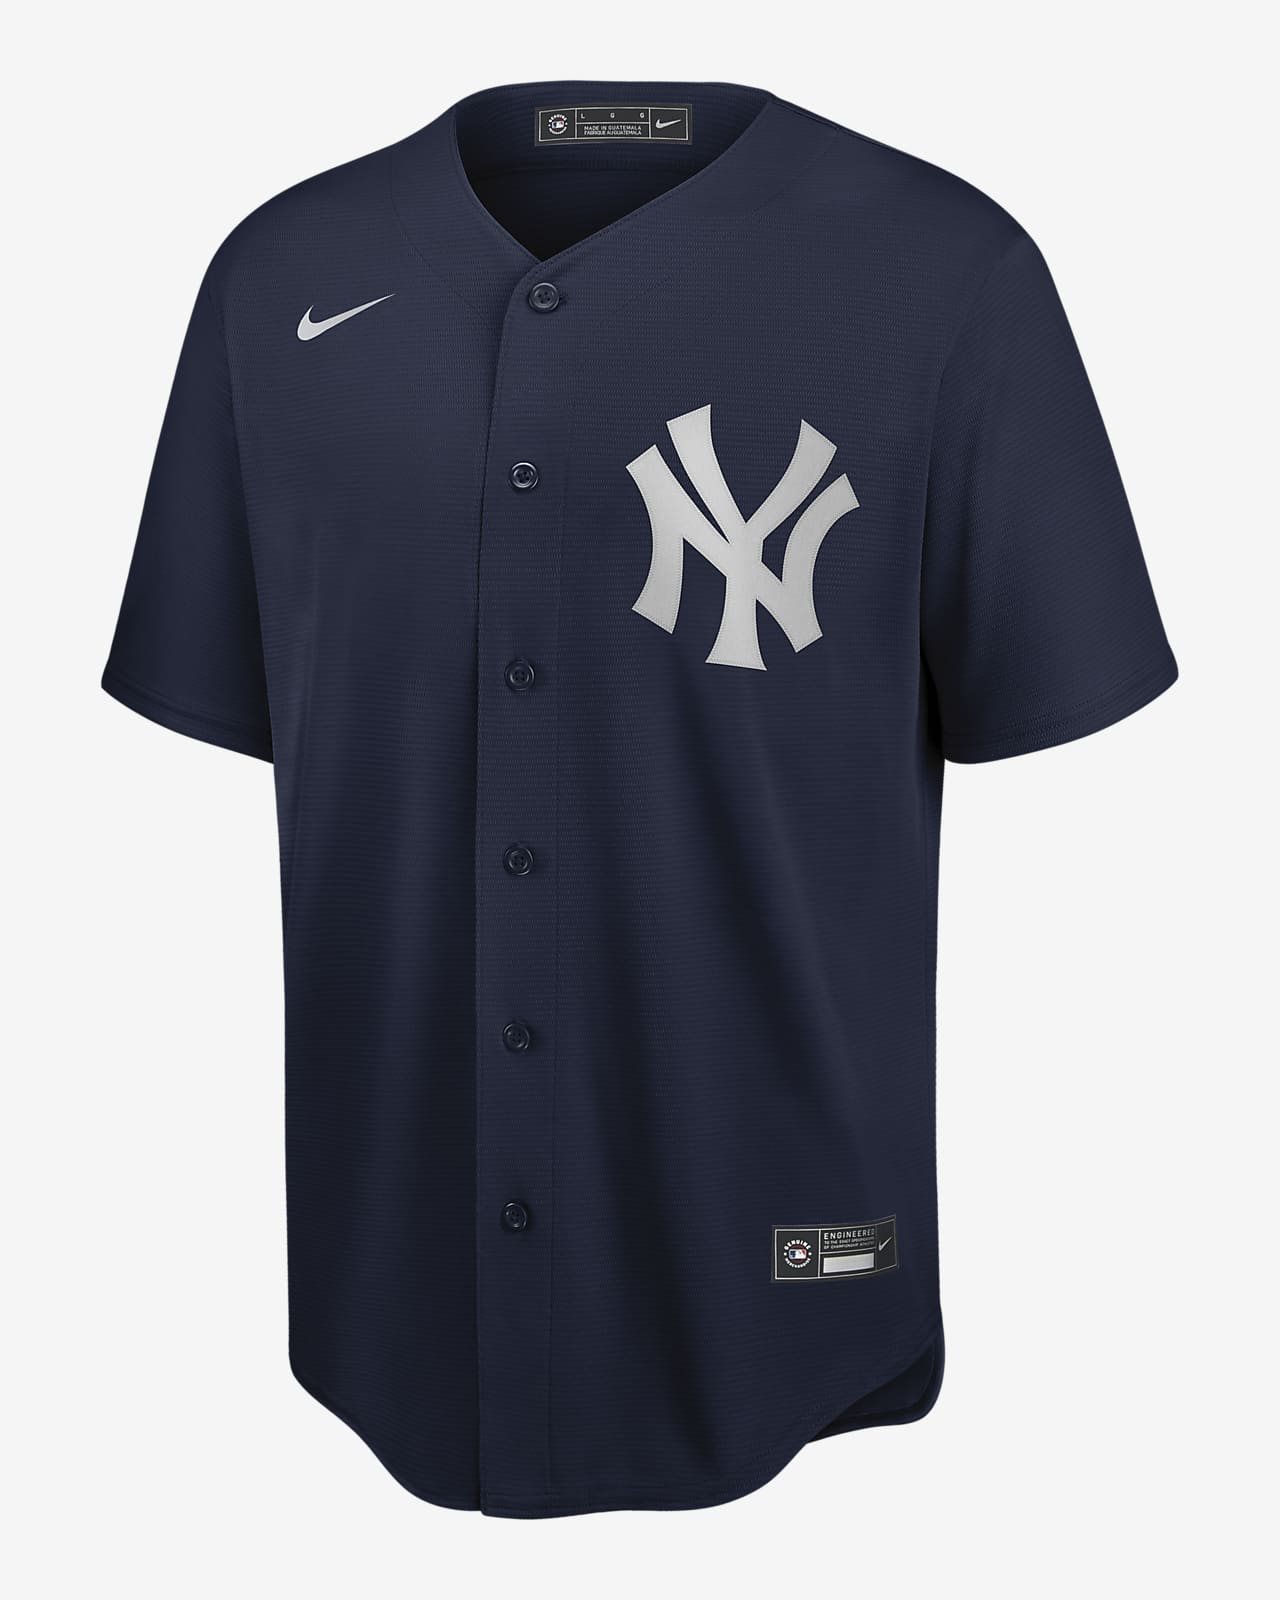 yankee baseball clothing